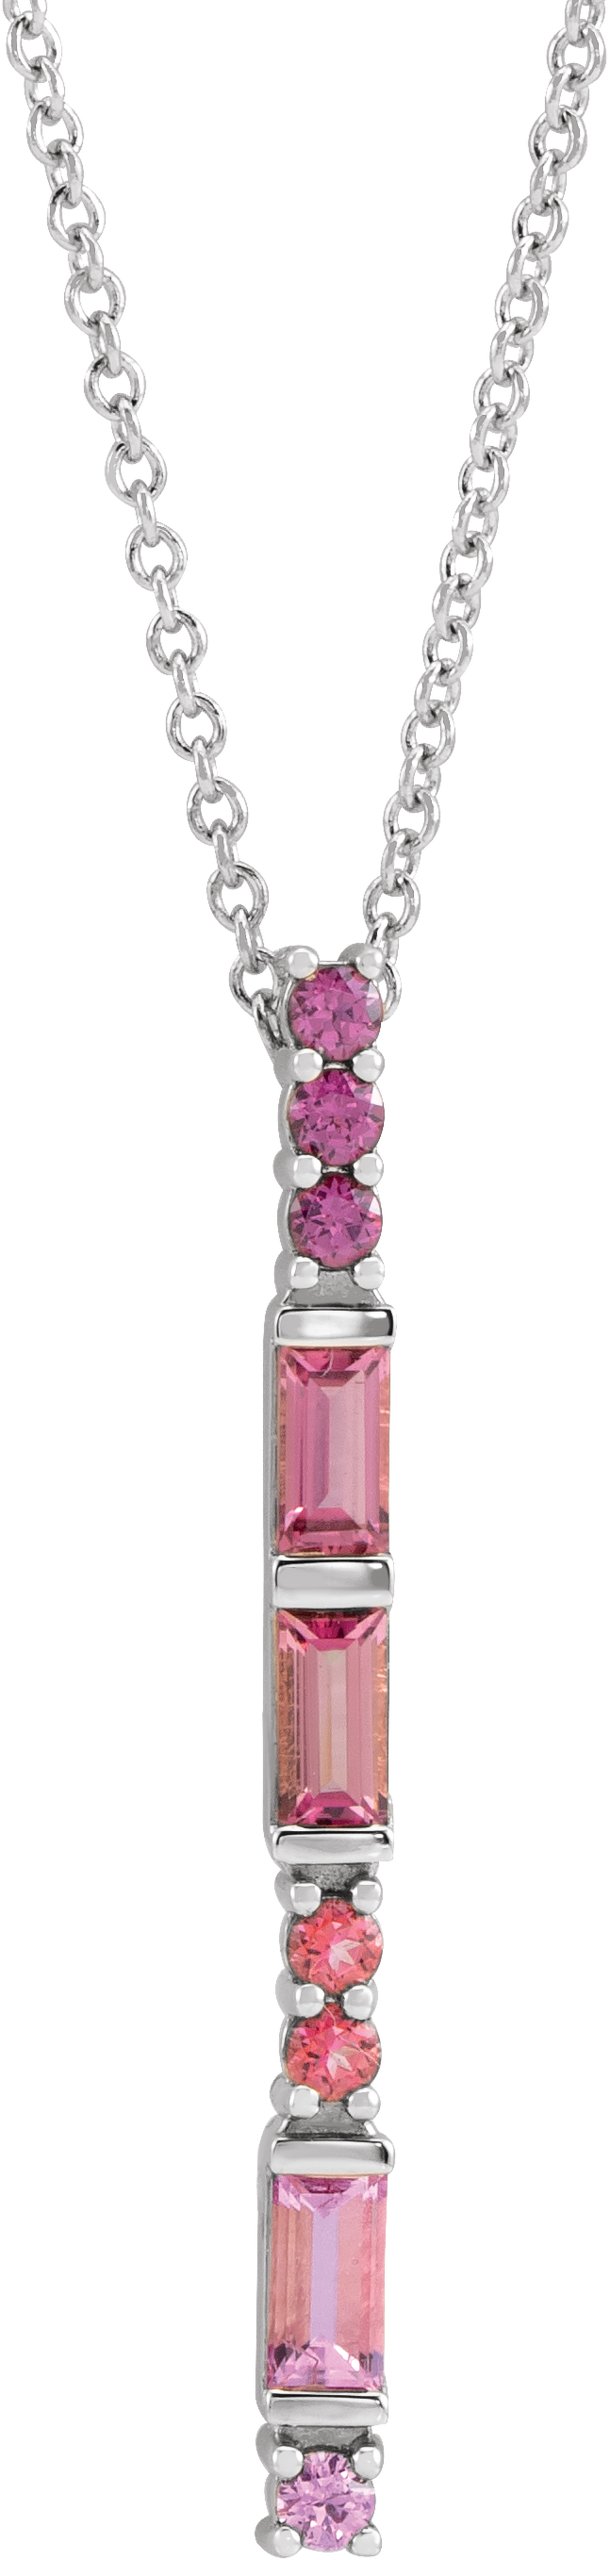 Sterling Silver Pink Multi Gemstone Bar 16 18 inch Necklace Ref. 17589023